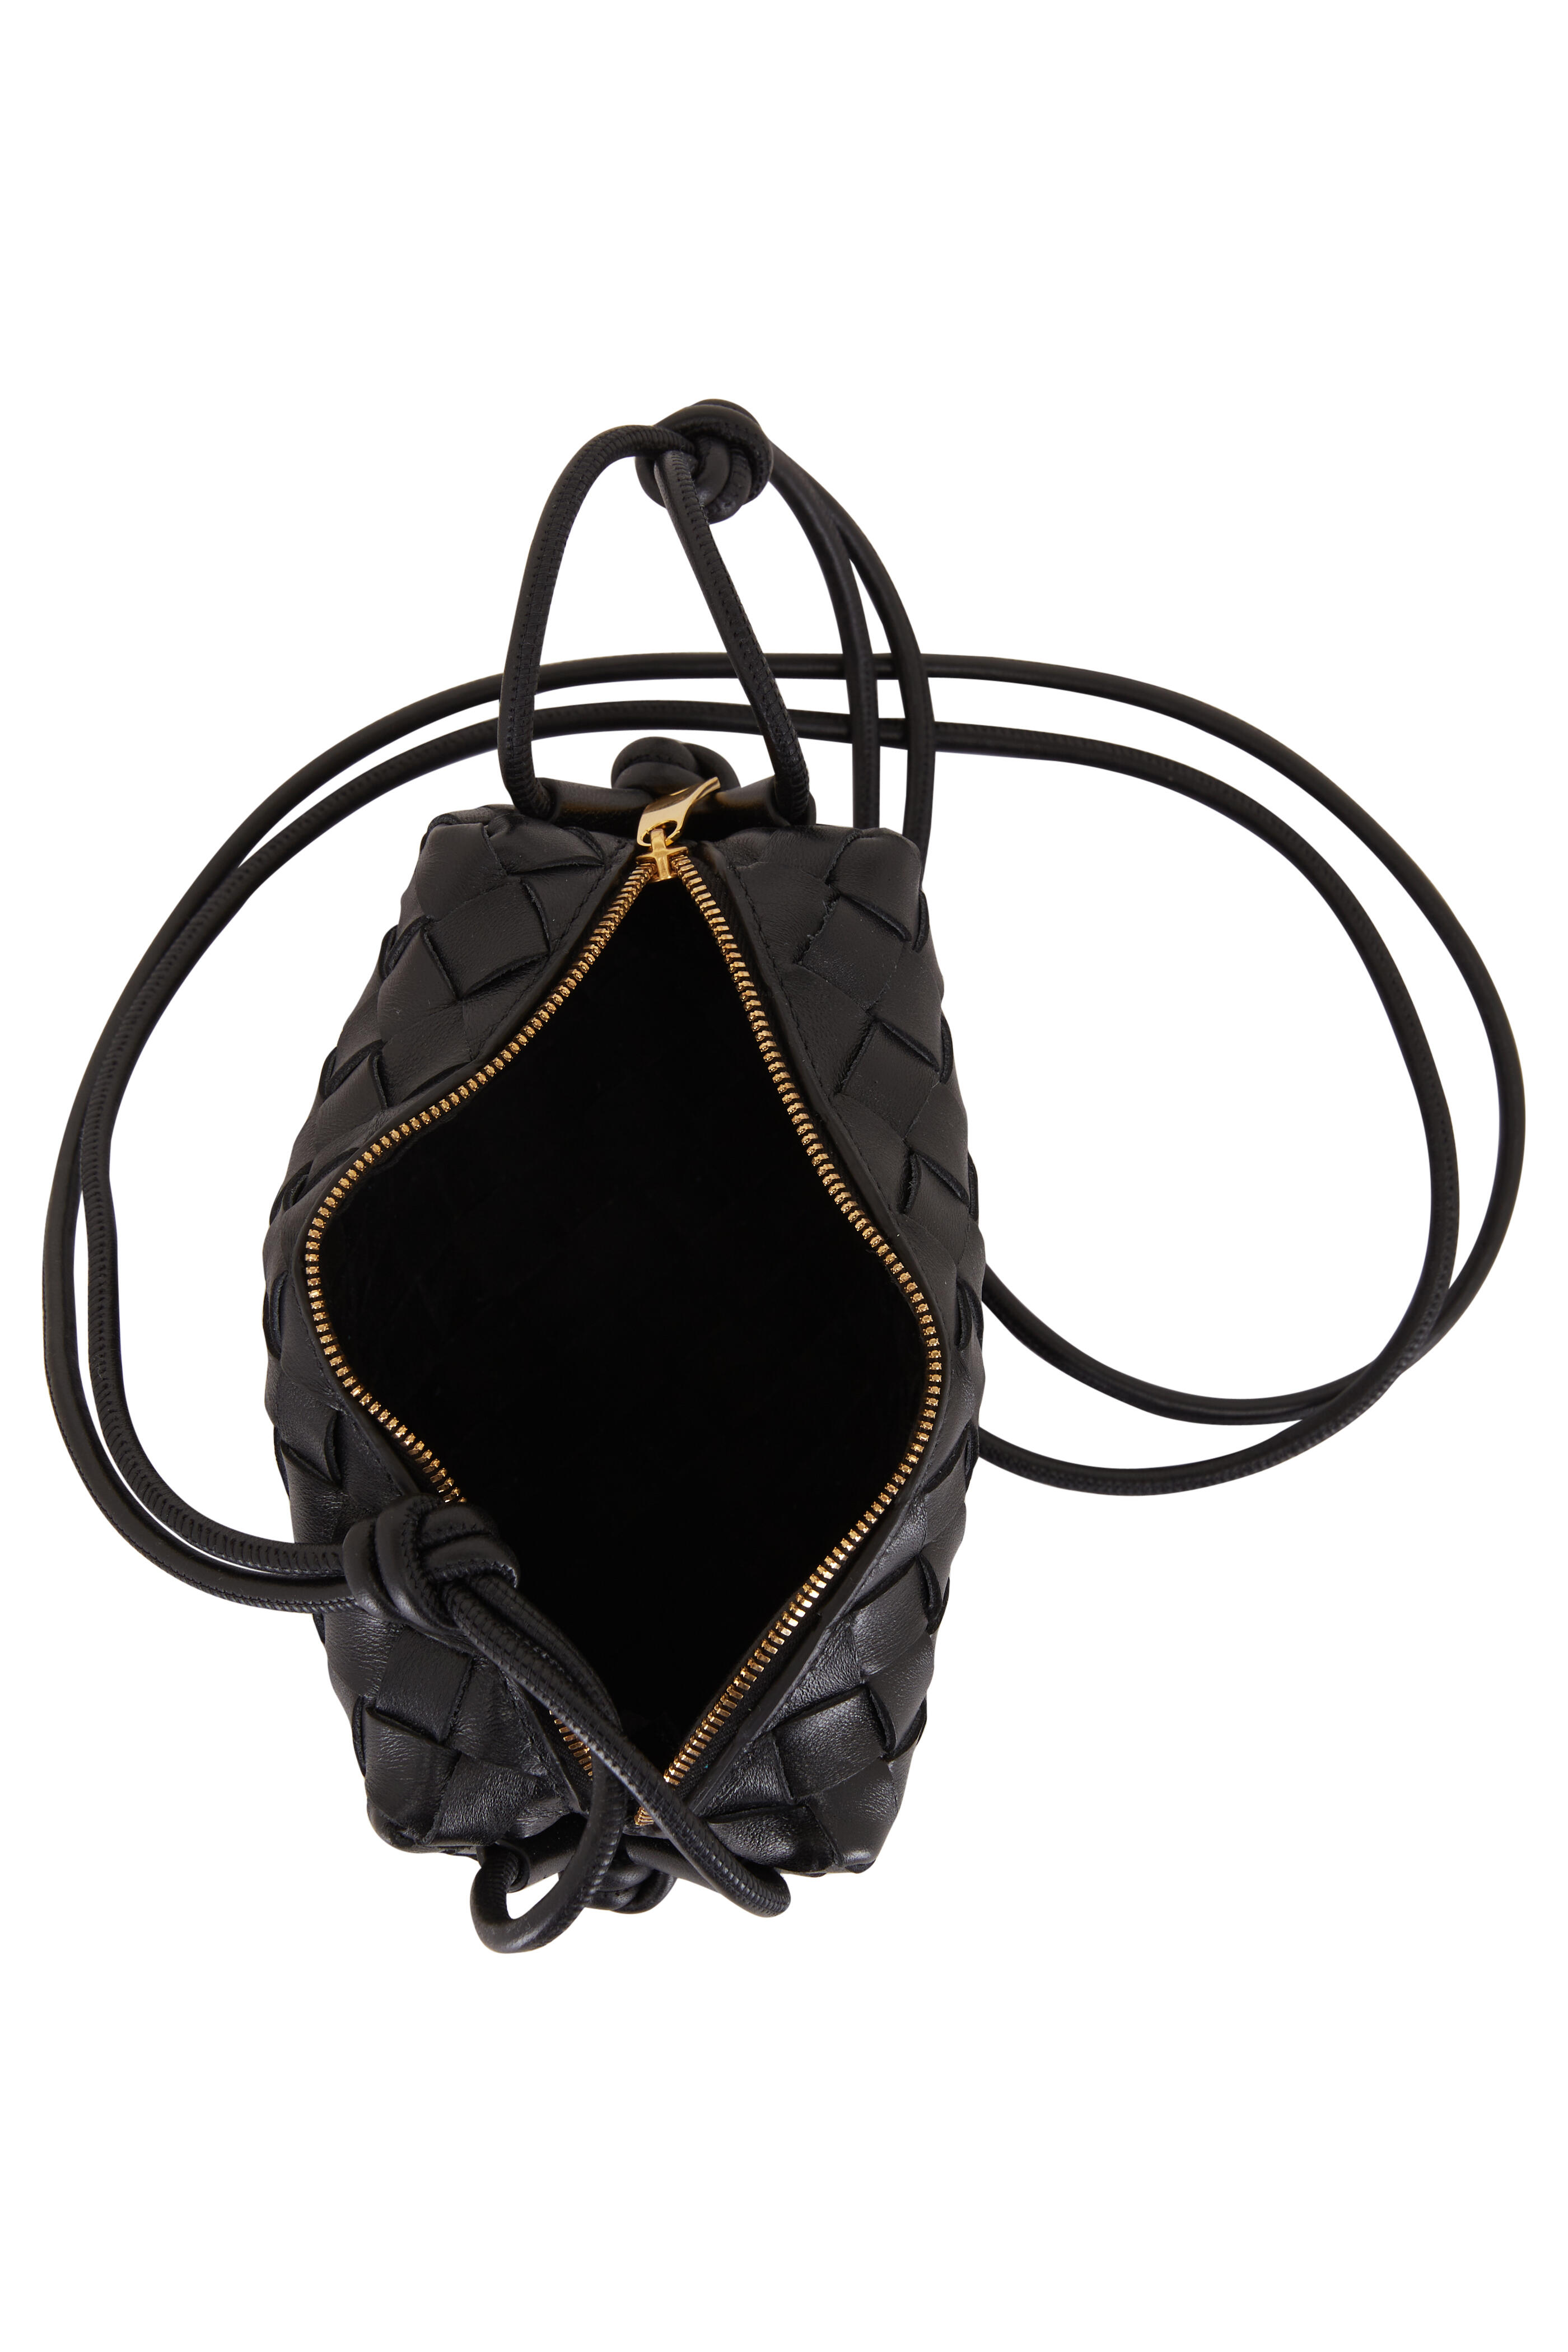 Bottega Veneta Mini Loop Bag in Black